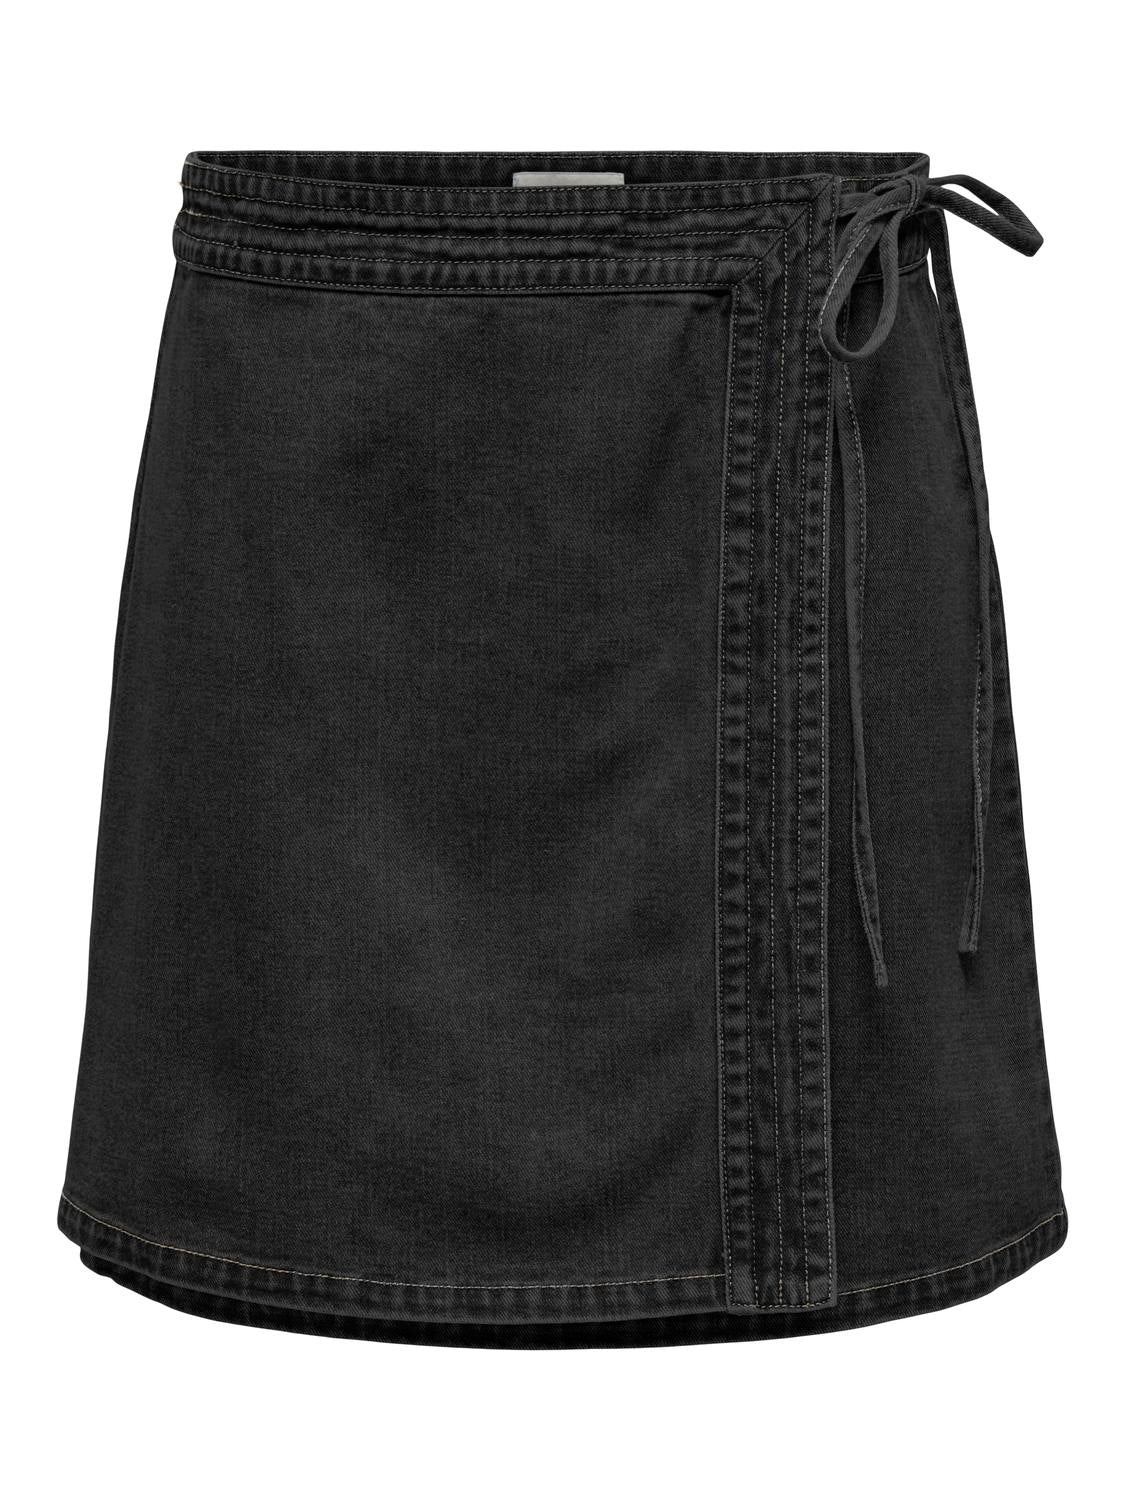 ONLVILLA Skirt - Washed Black